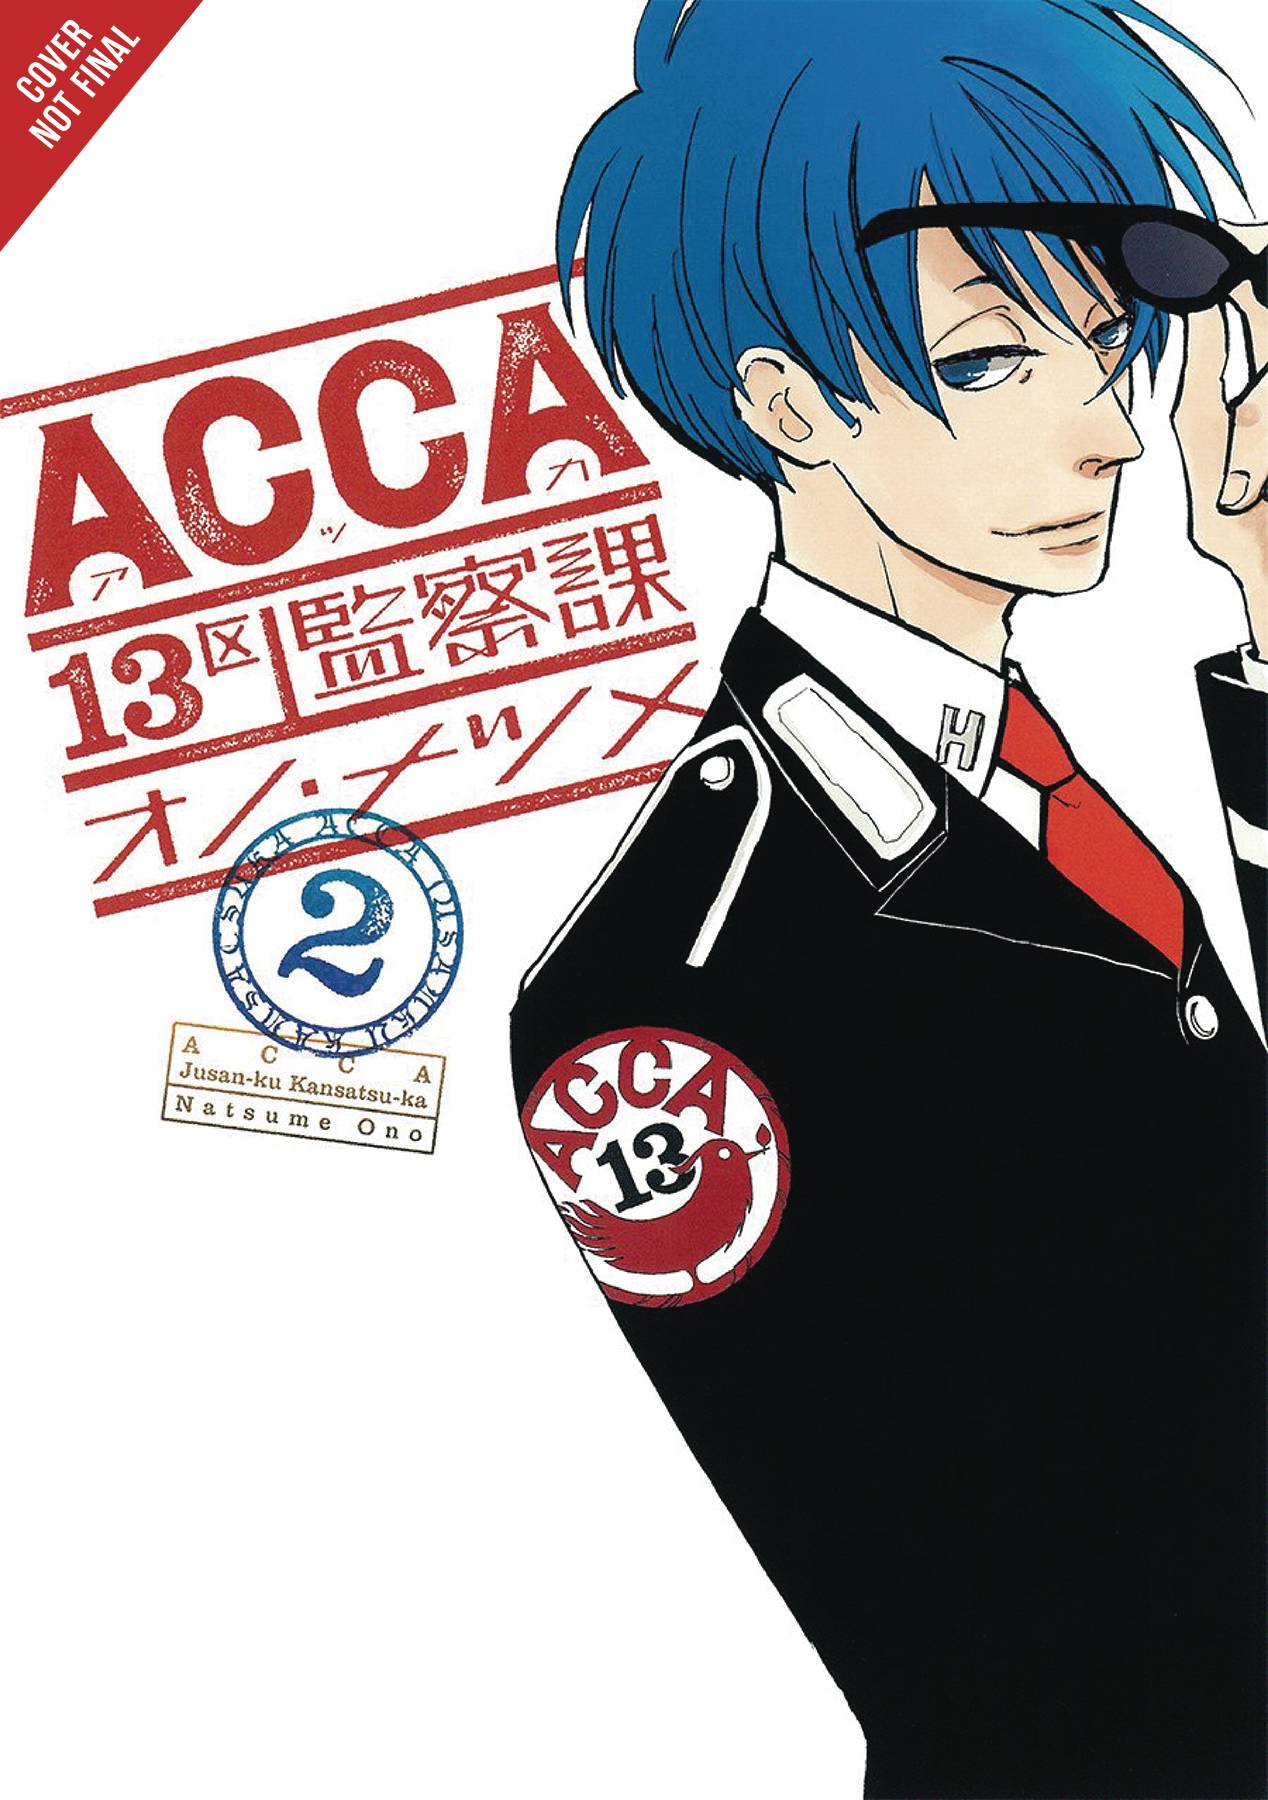 Acca 13 Territory Inspection Dept Manga Volume 2